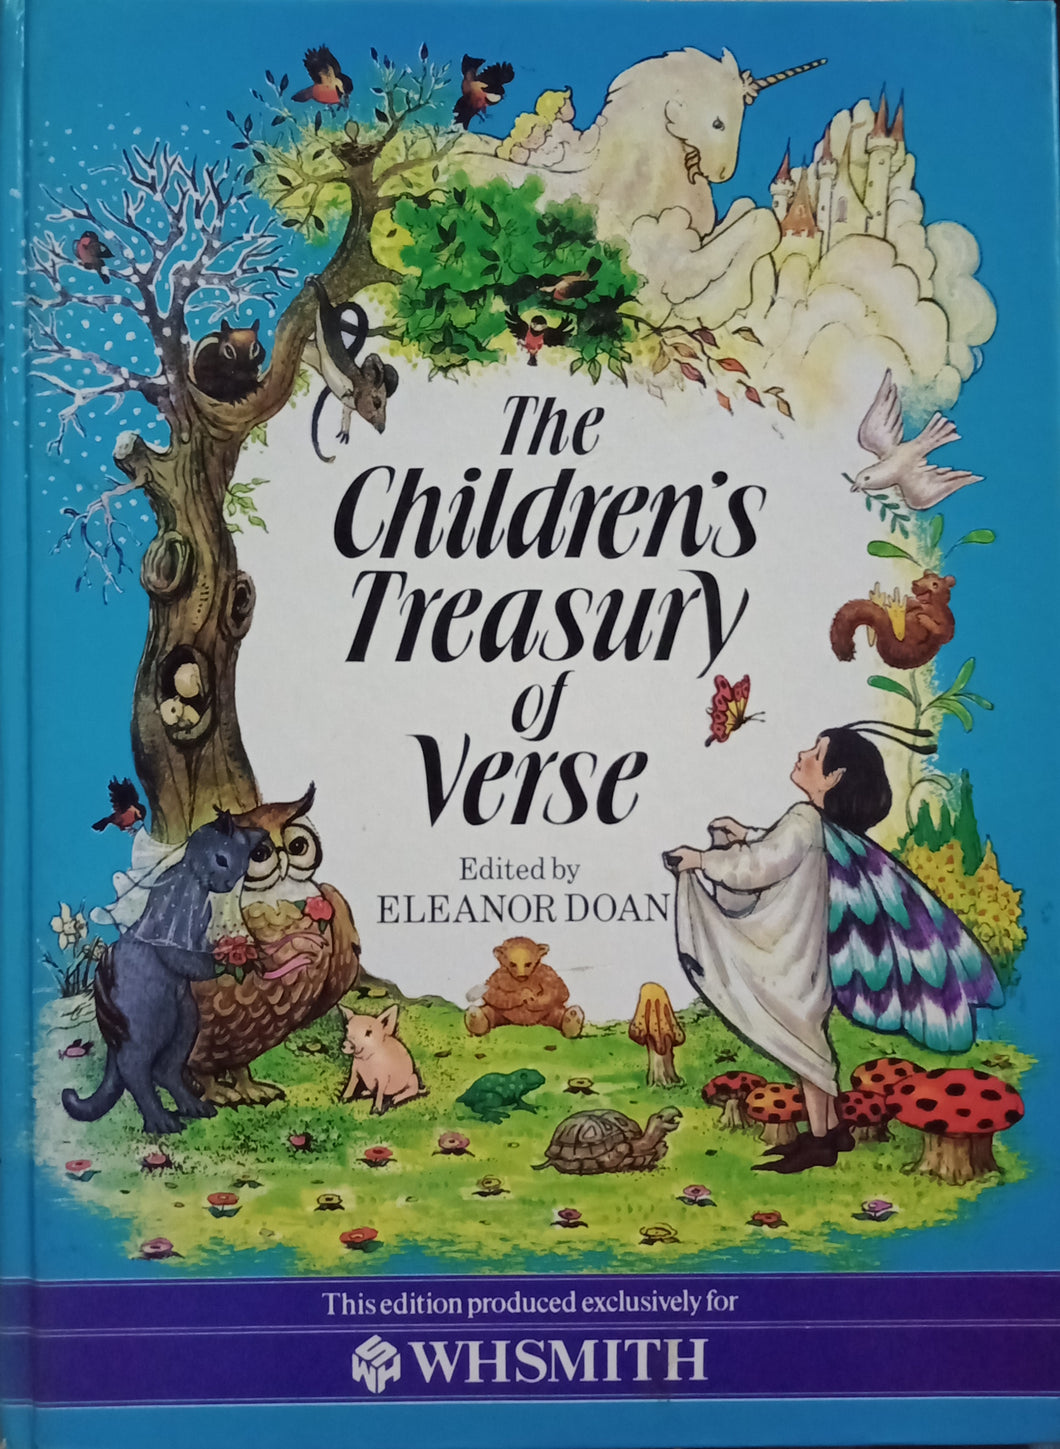 The Children's Treasury of Verse by Eleanor Doan